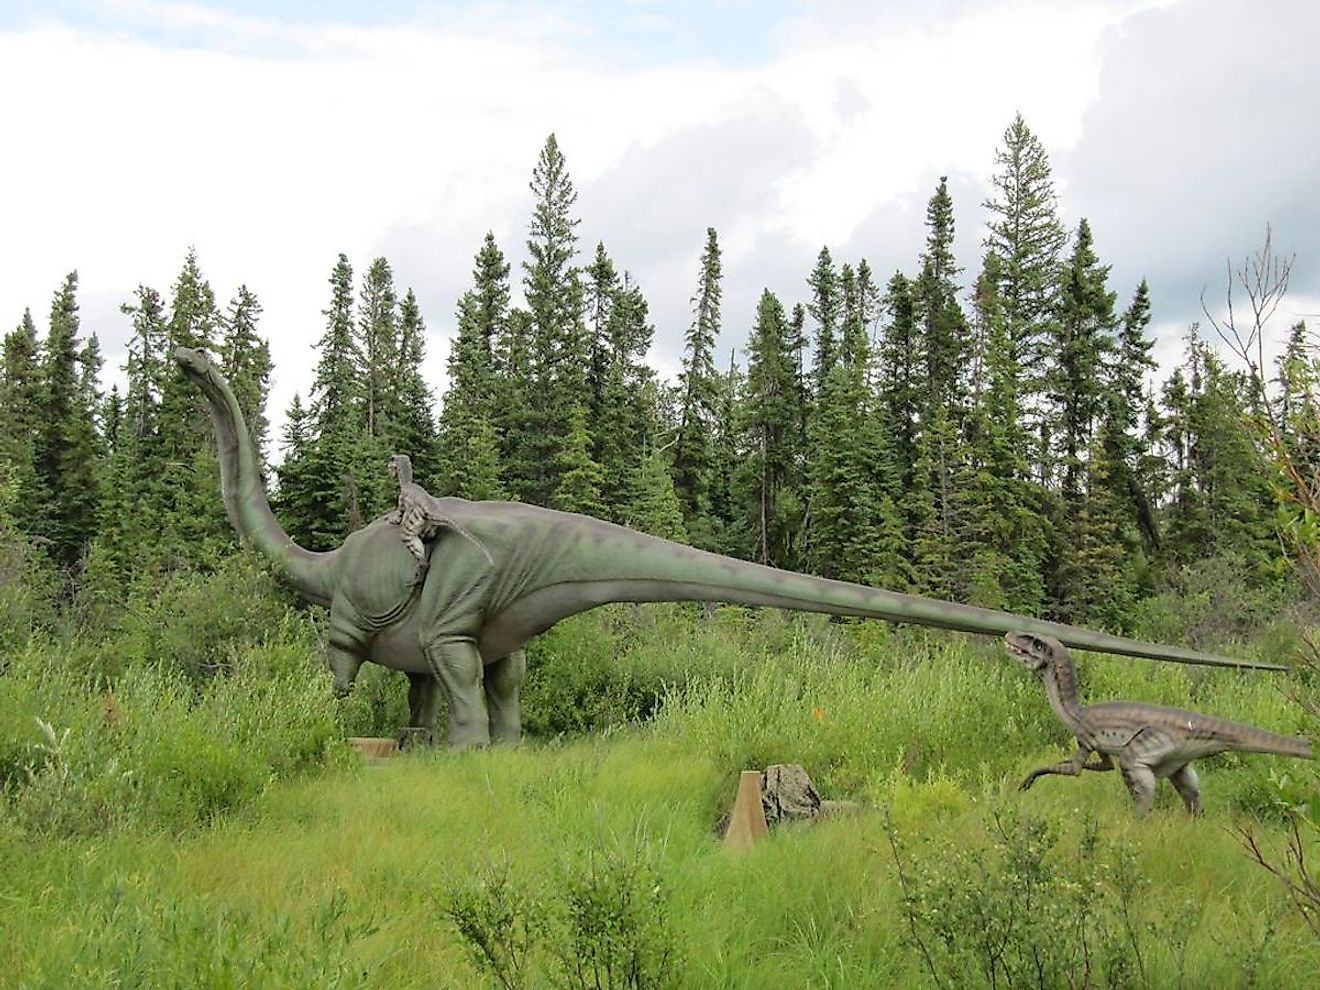 Jurassic Forest in Edmonton. Image credit: Pinterest.com